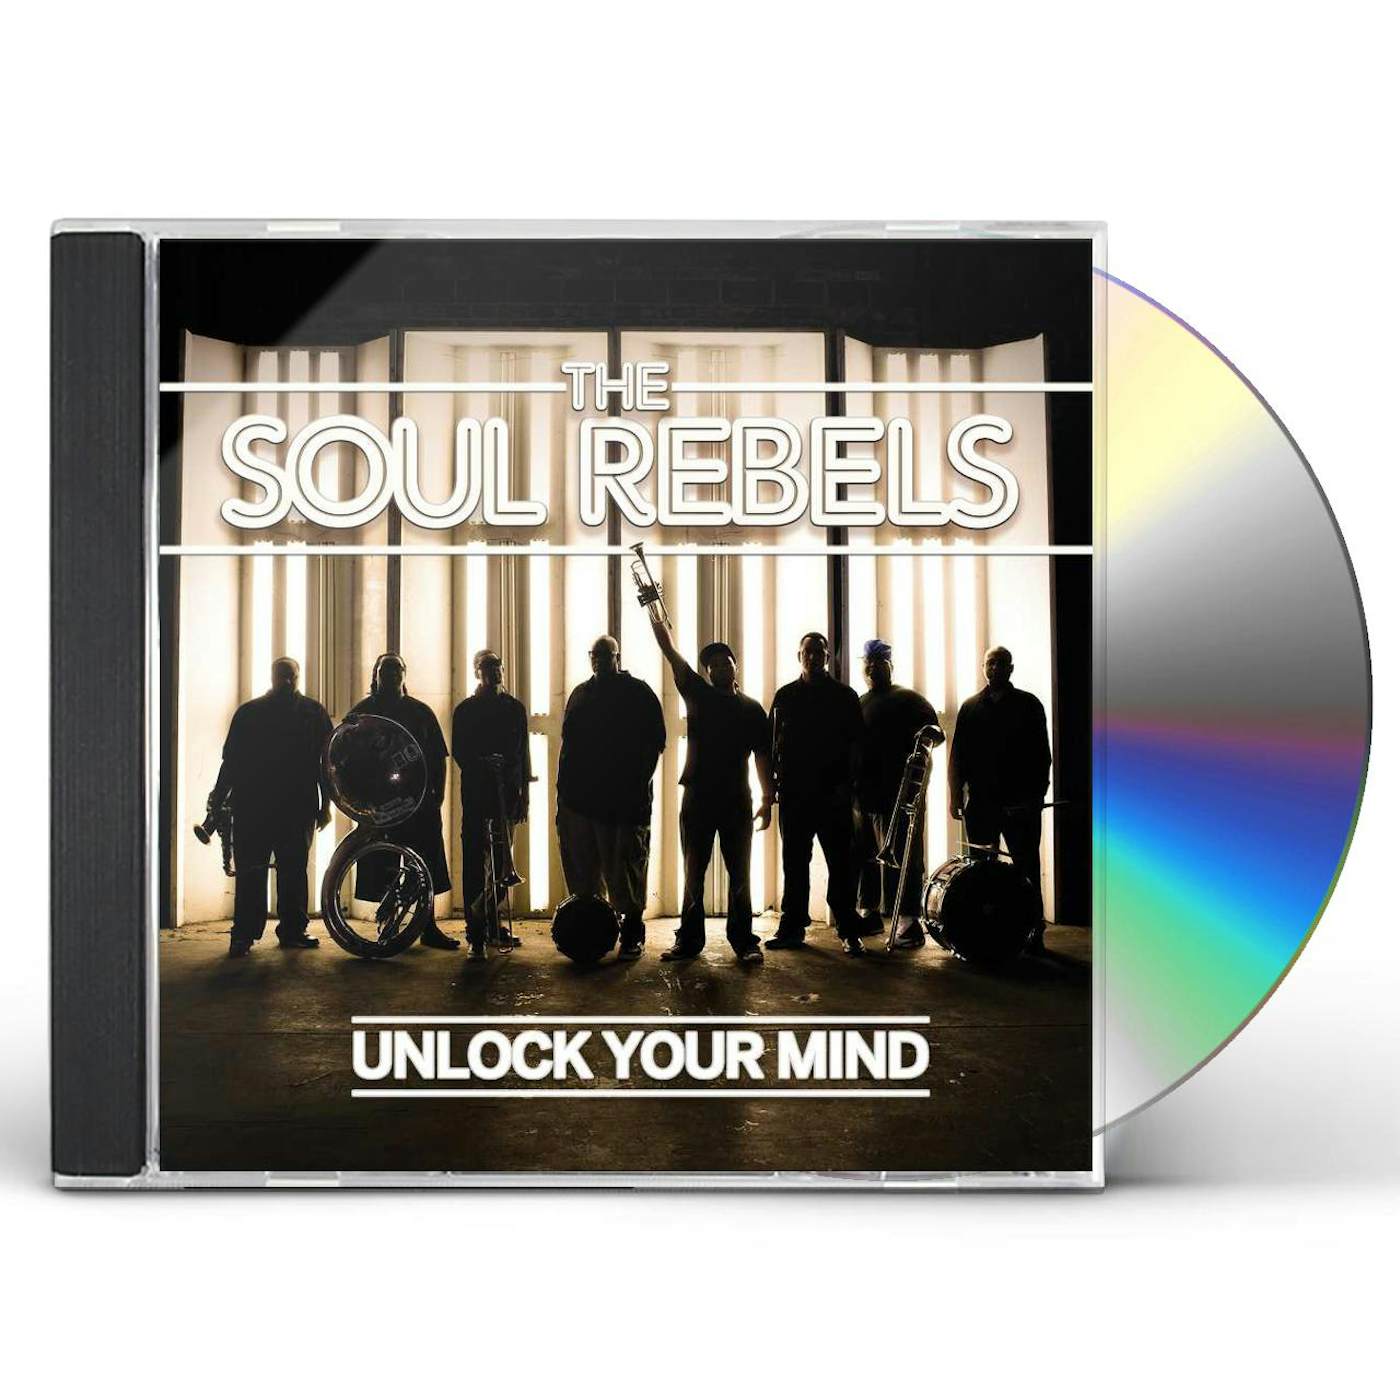 The Soul Rebels Unlock Your Mind CD